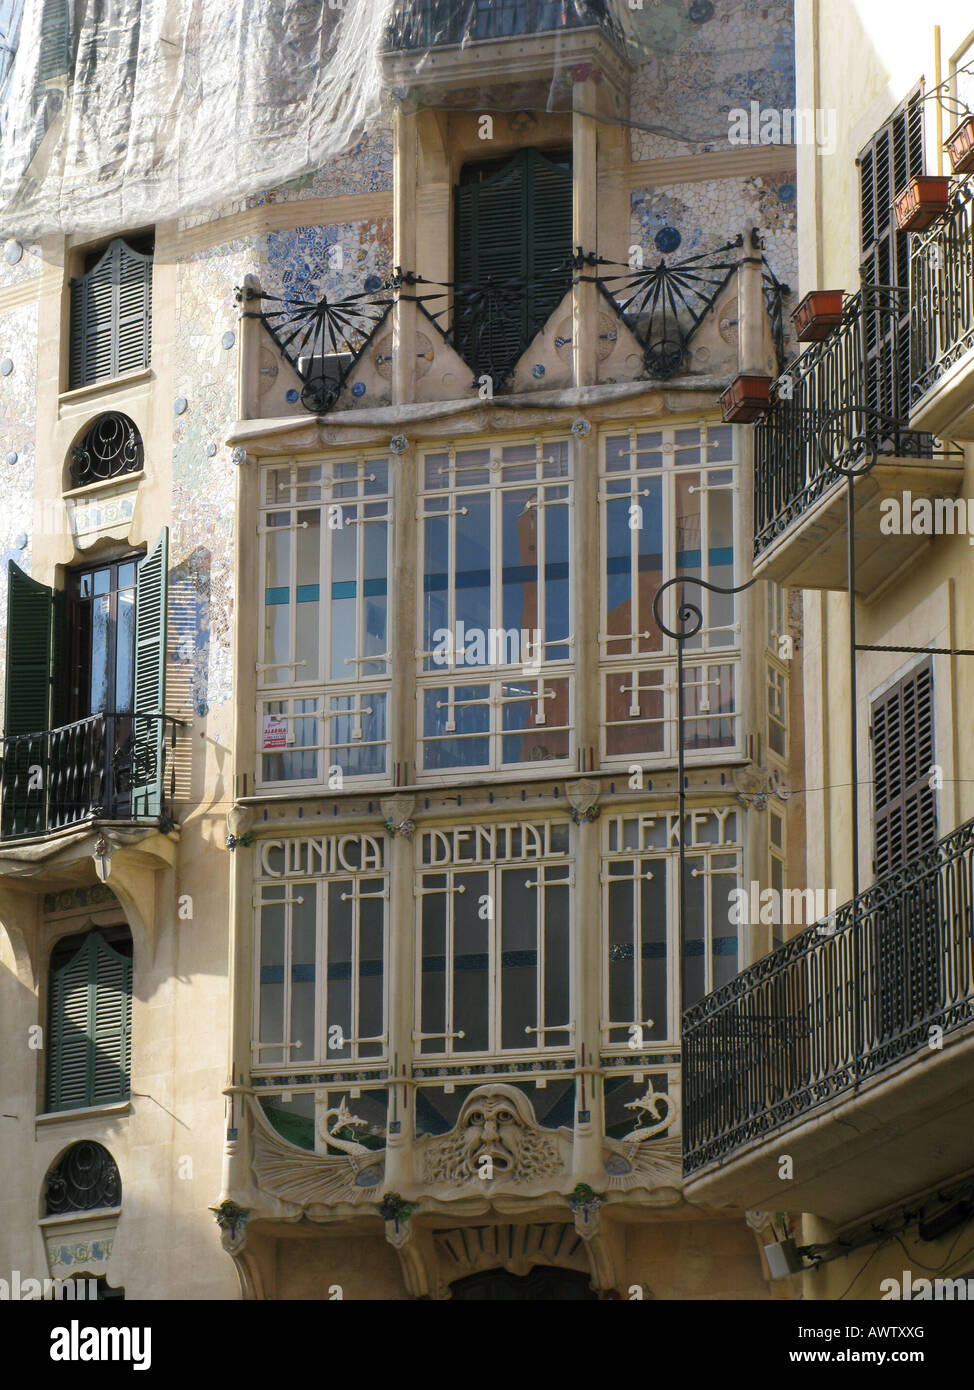 Enclosed glass balcony, or verandah window, with the writing: Clinica Dental - Palma, Mallorca, Spain Stock Photo